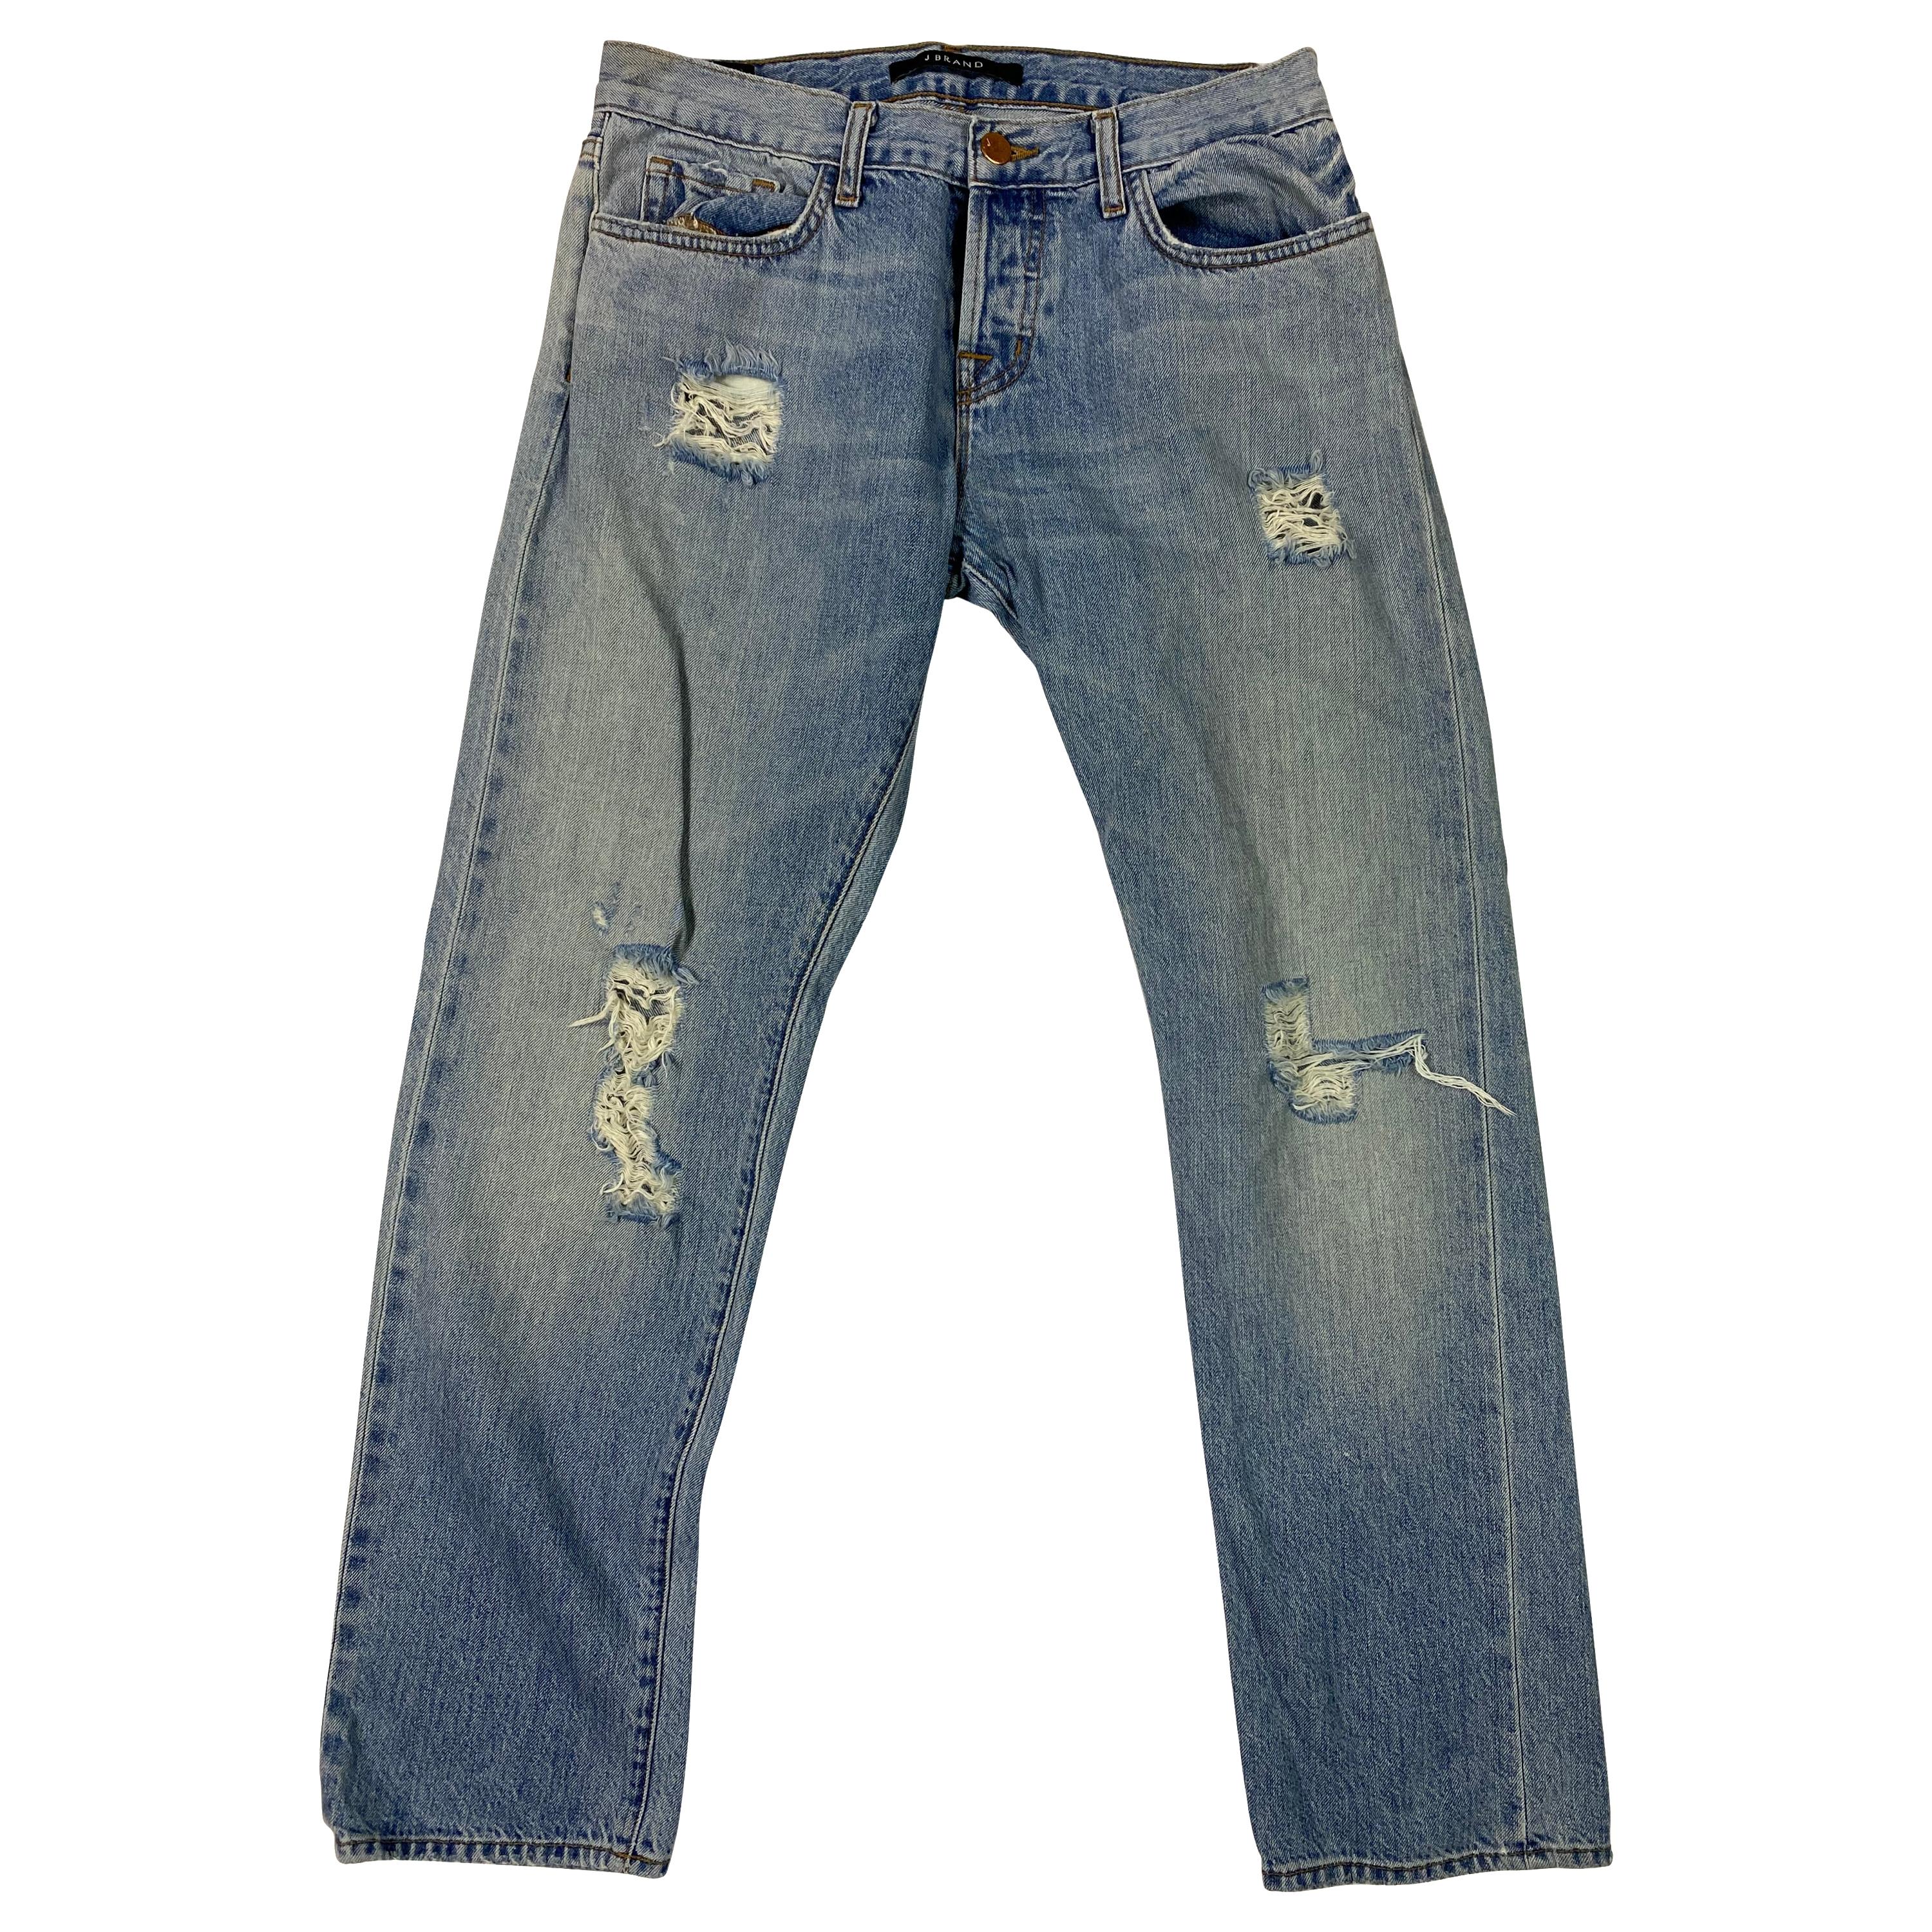 J Brand Light Blue Distressed Denim Jeans, Size 26